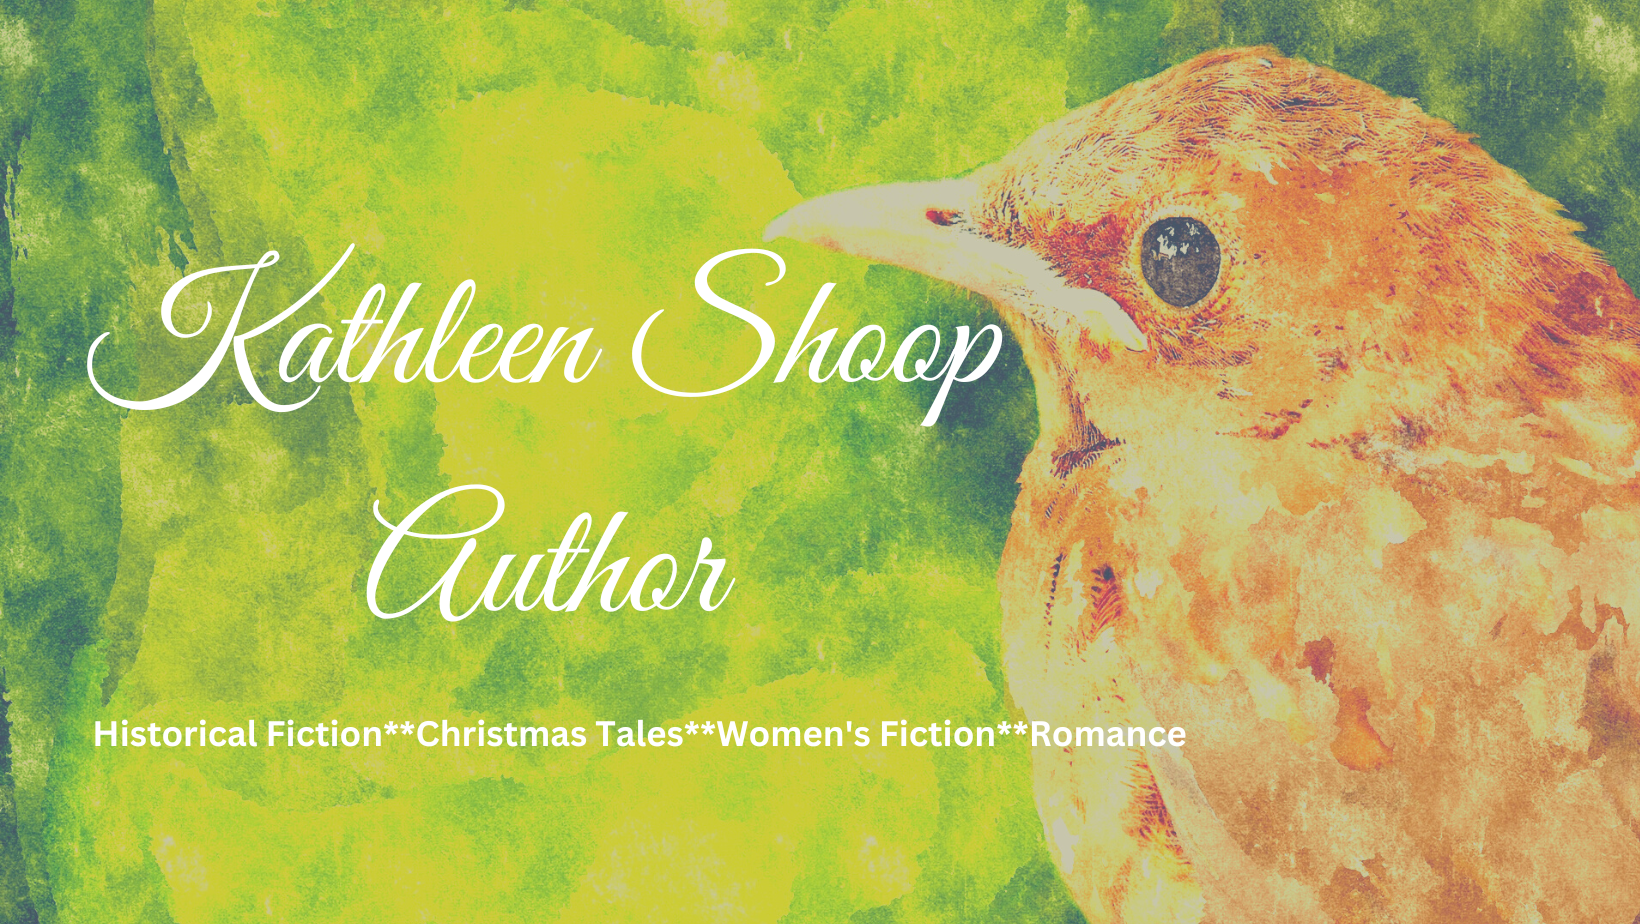 Kathleen Shoop, Author: Historical fiction, Christmas tales, women's fiction, romance